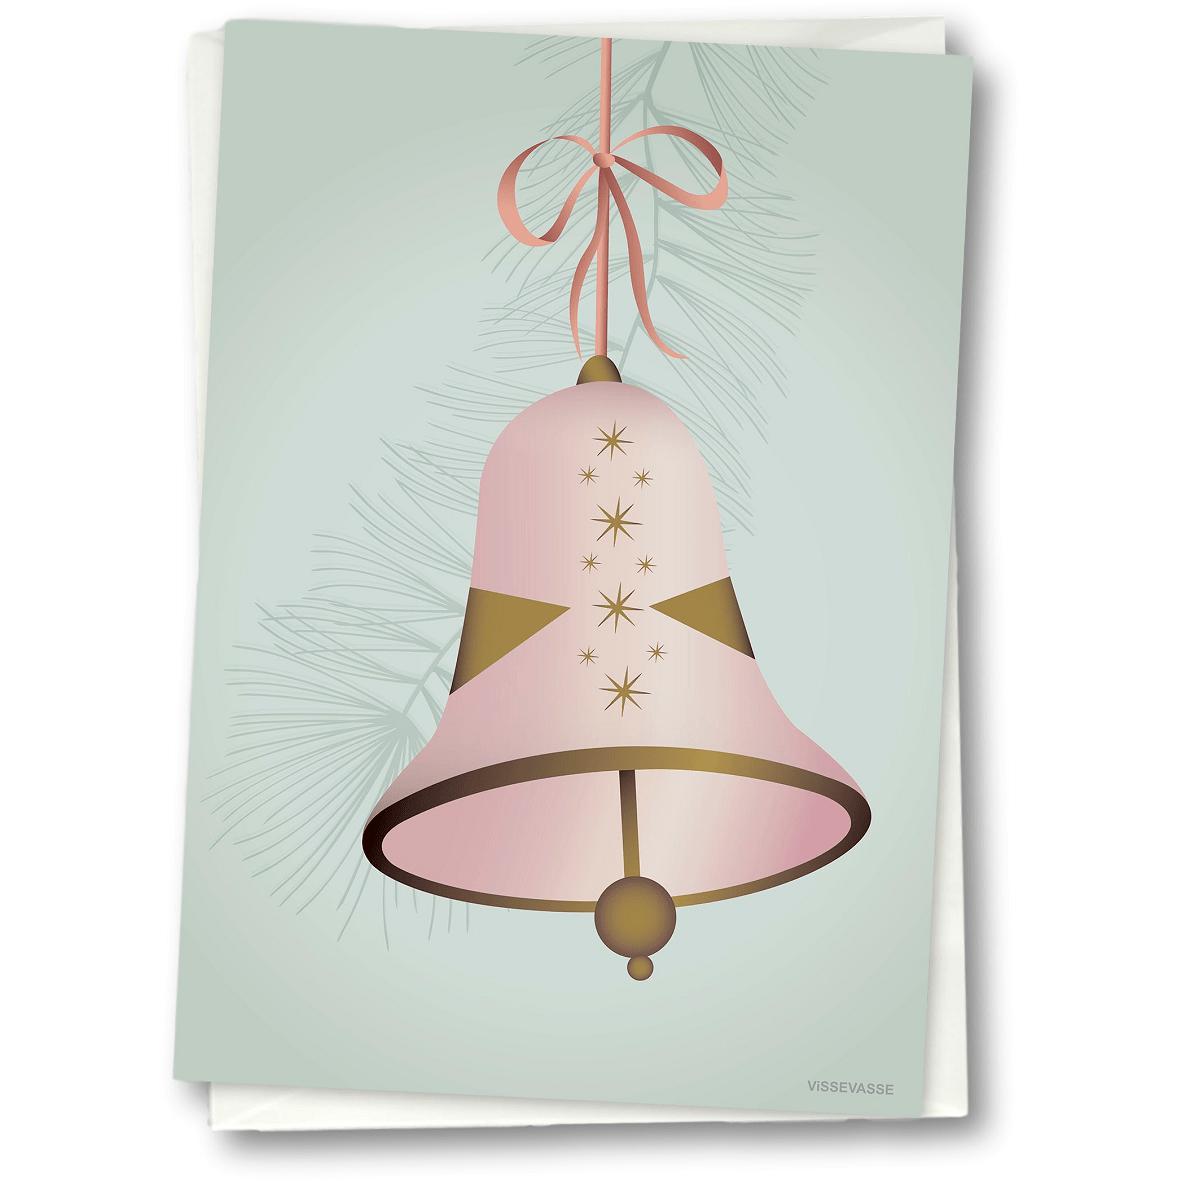 Vissevasse圣诞钟贺卡15 x21 cm，粉红色